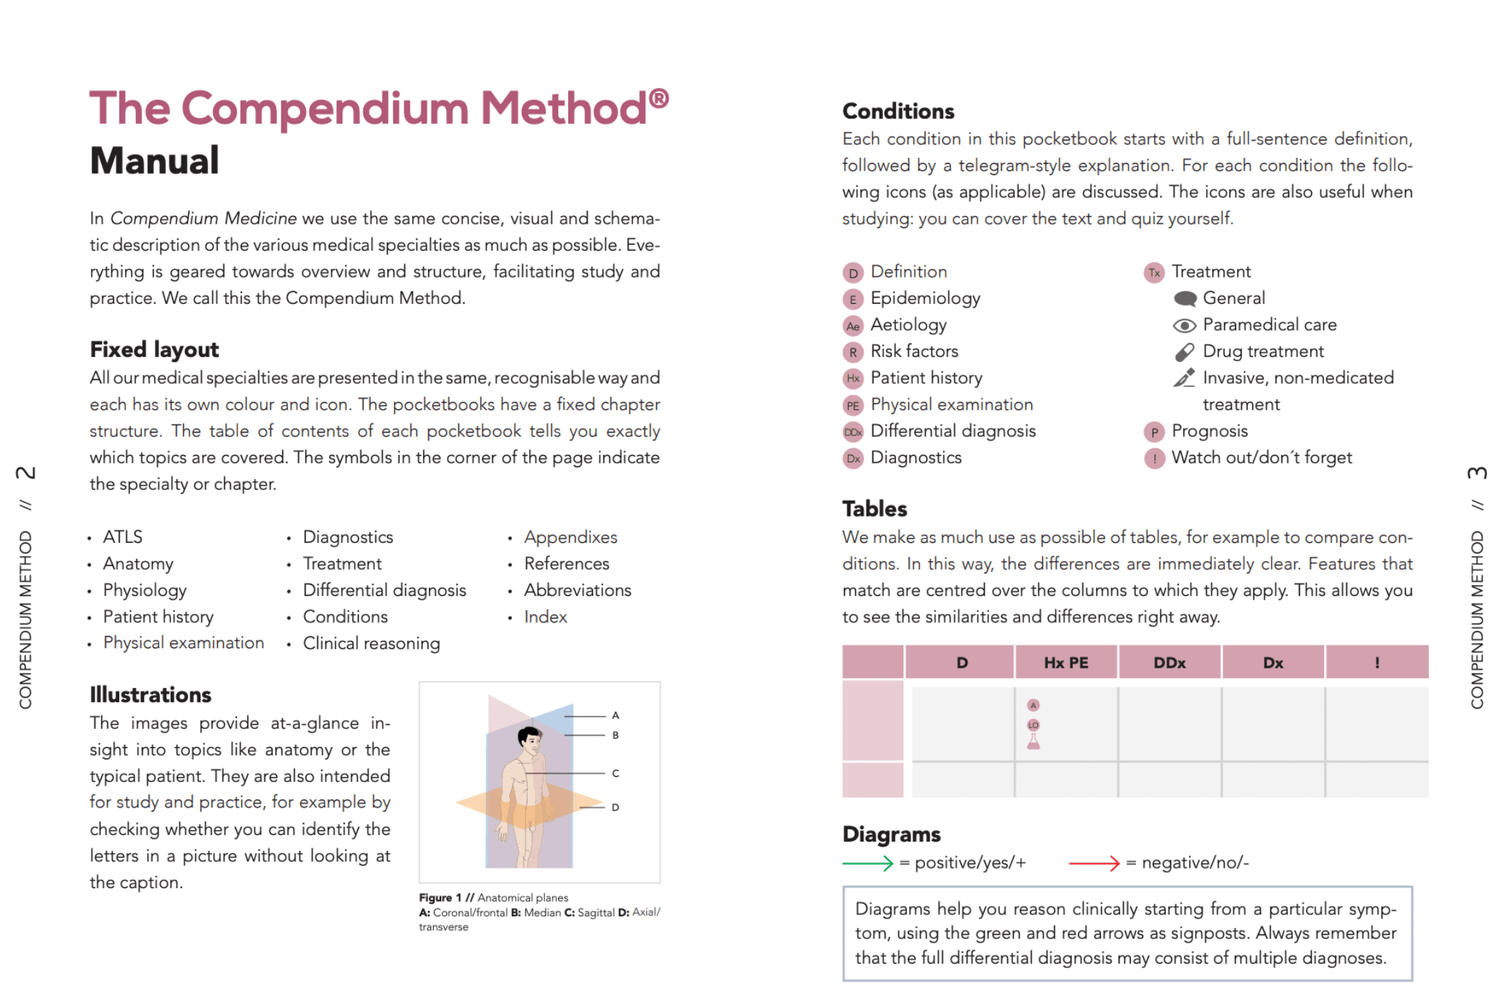 Overview of the Compendium Method 